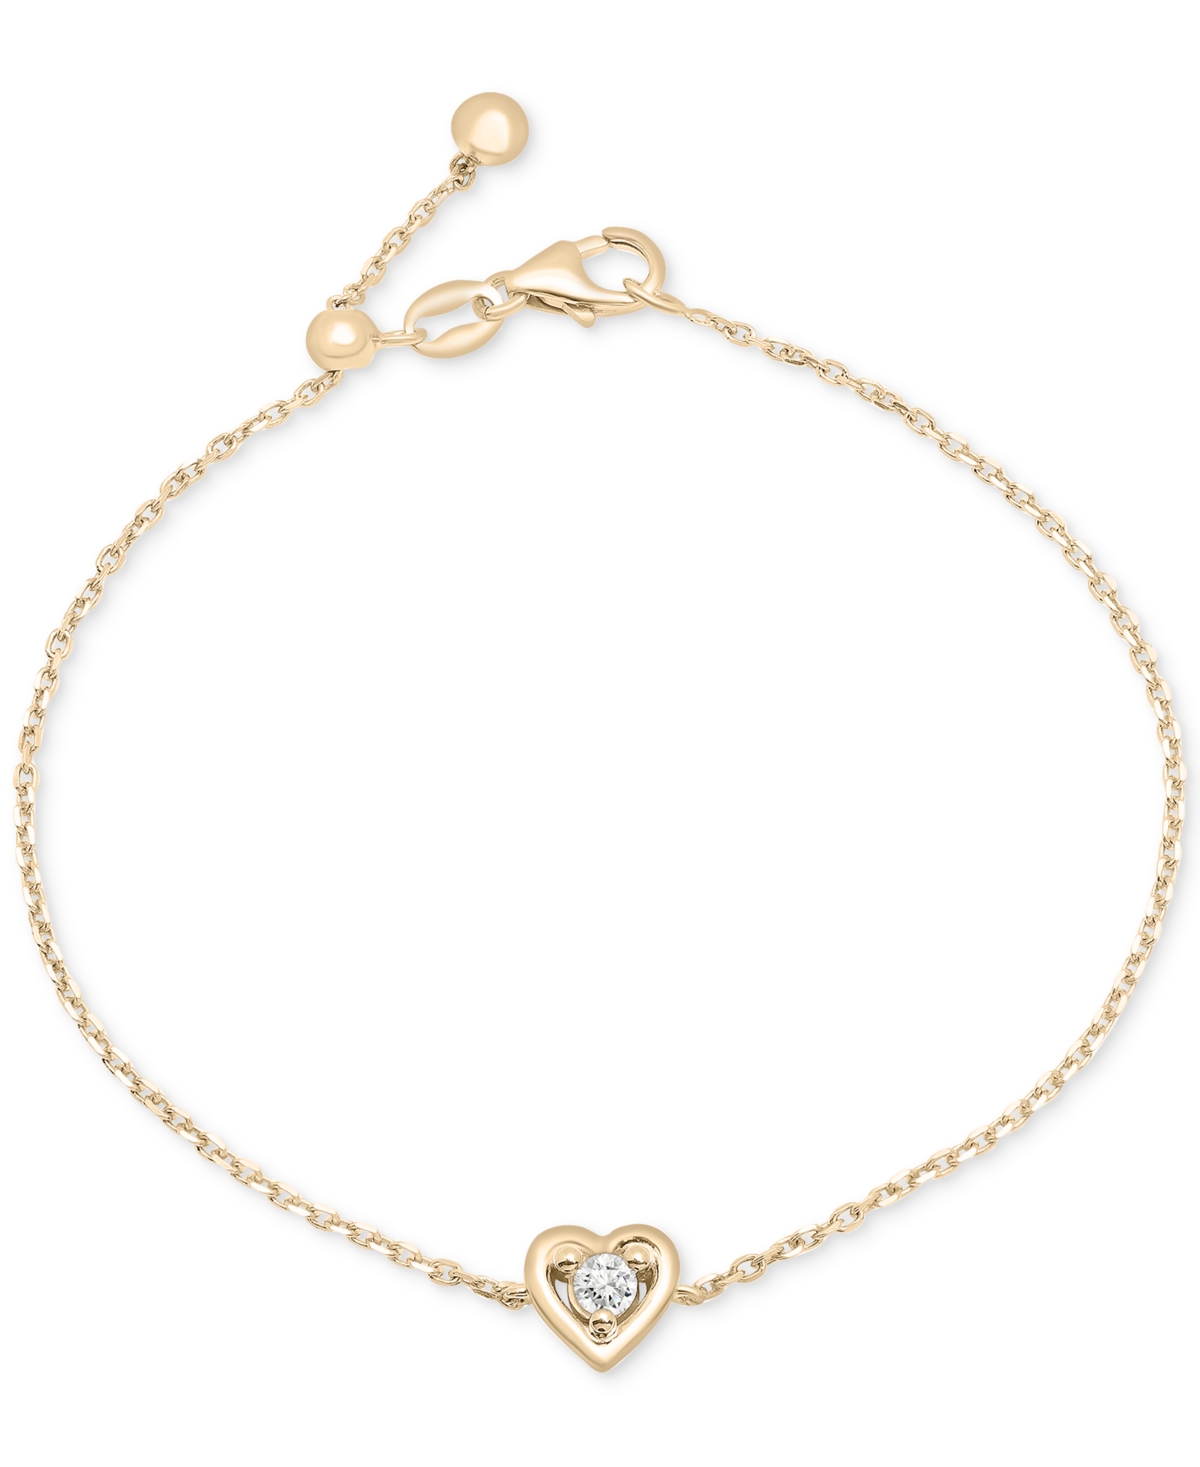 Diamond Heart Link Bracelet (1/10 ct. t.w.) in Gold Vermeil, Created for Macy's - Gold Vermeil